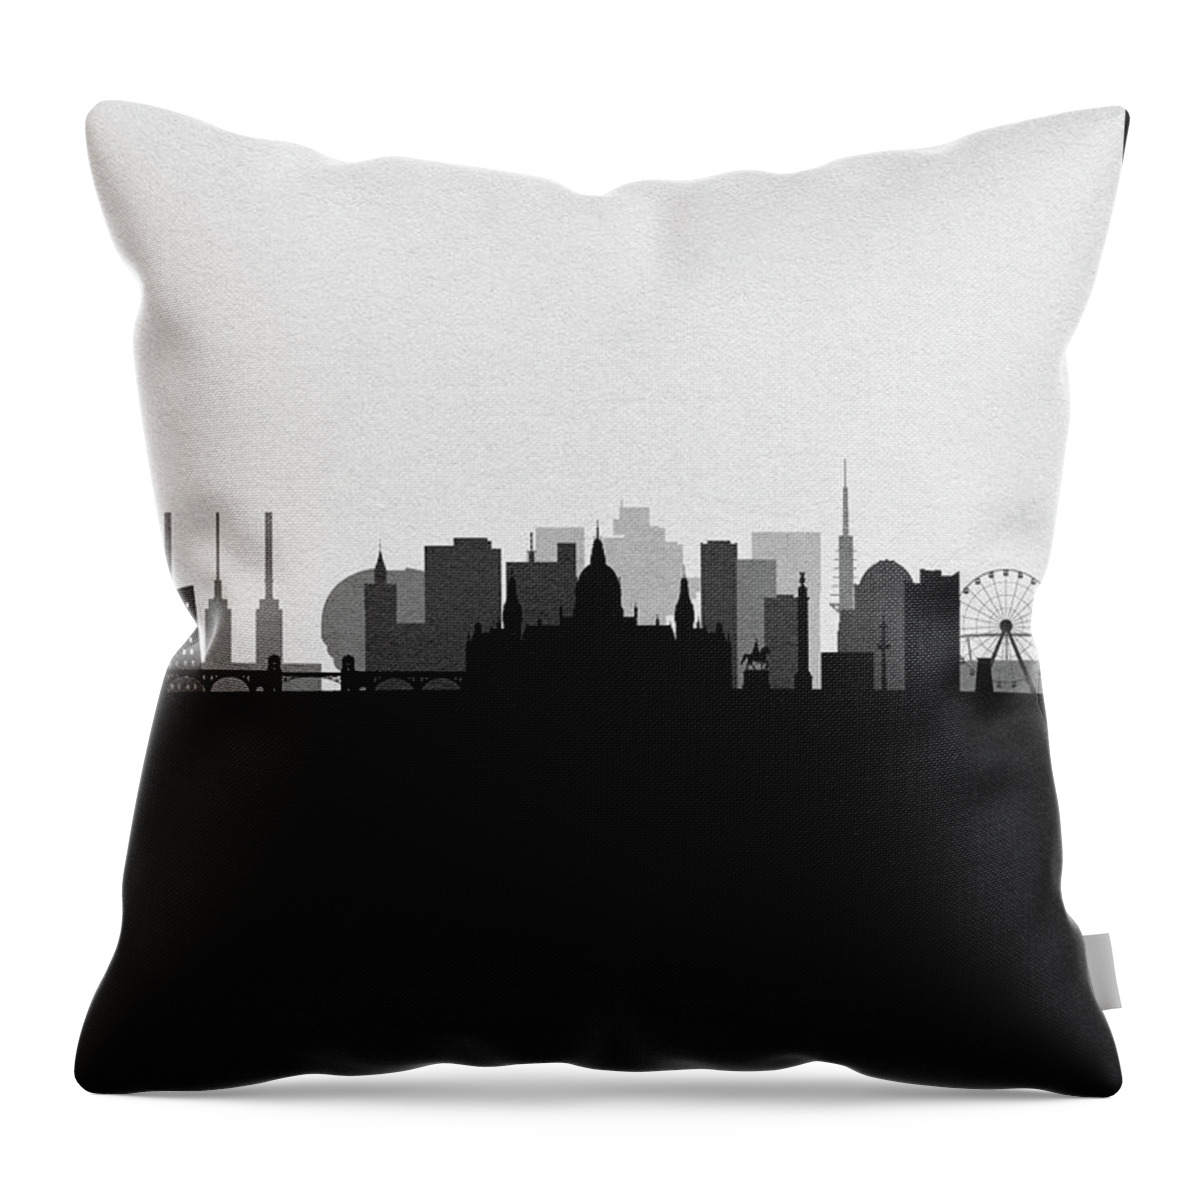 Hanover Throw Pillow featuring the digital art Hanover Cityscape Art by Inspirowl Design